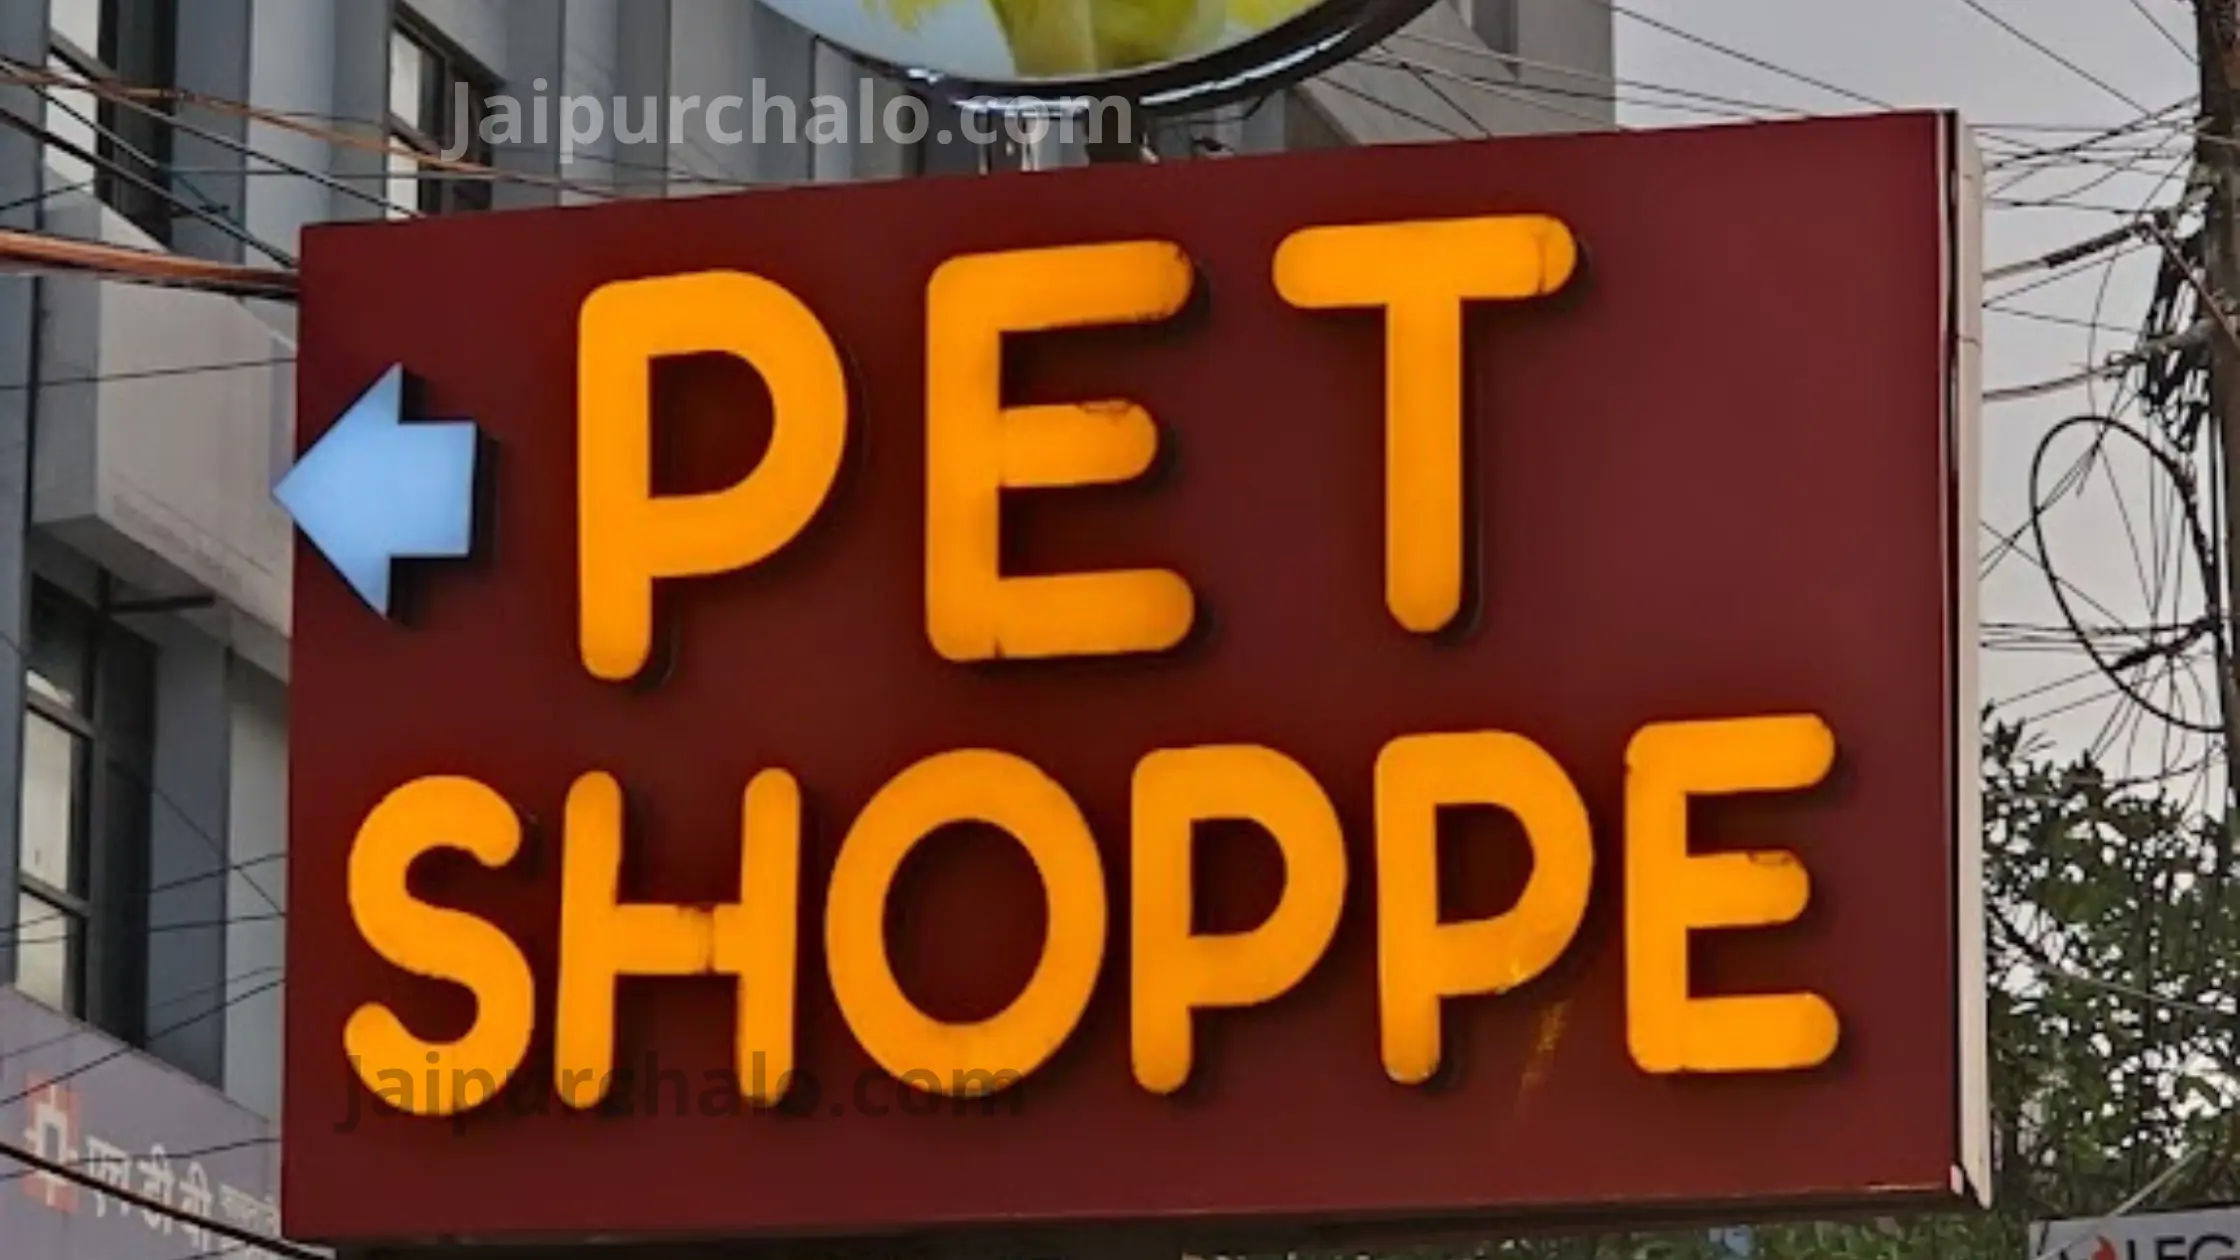 Pet Shoppe Jaipur – timings, address, price, reviews